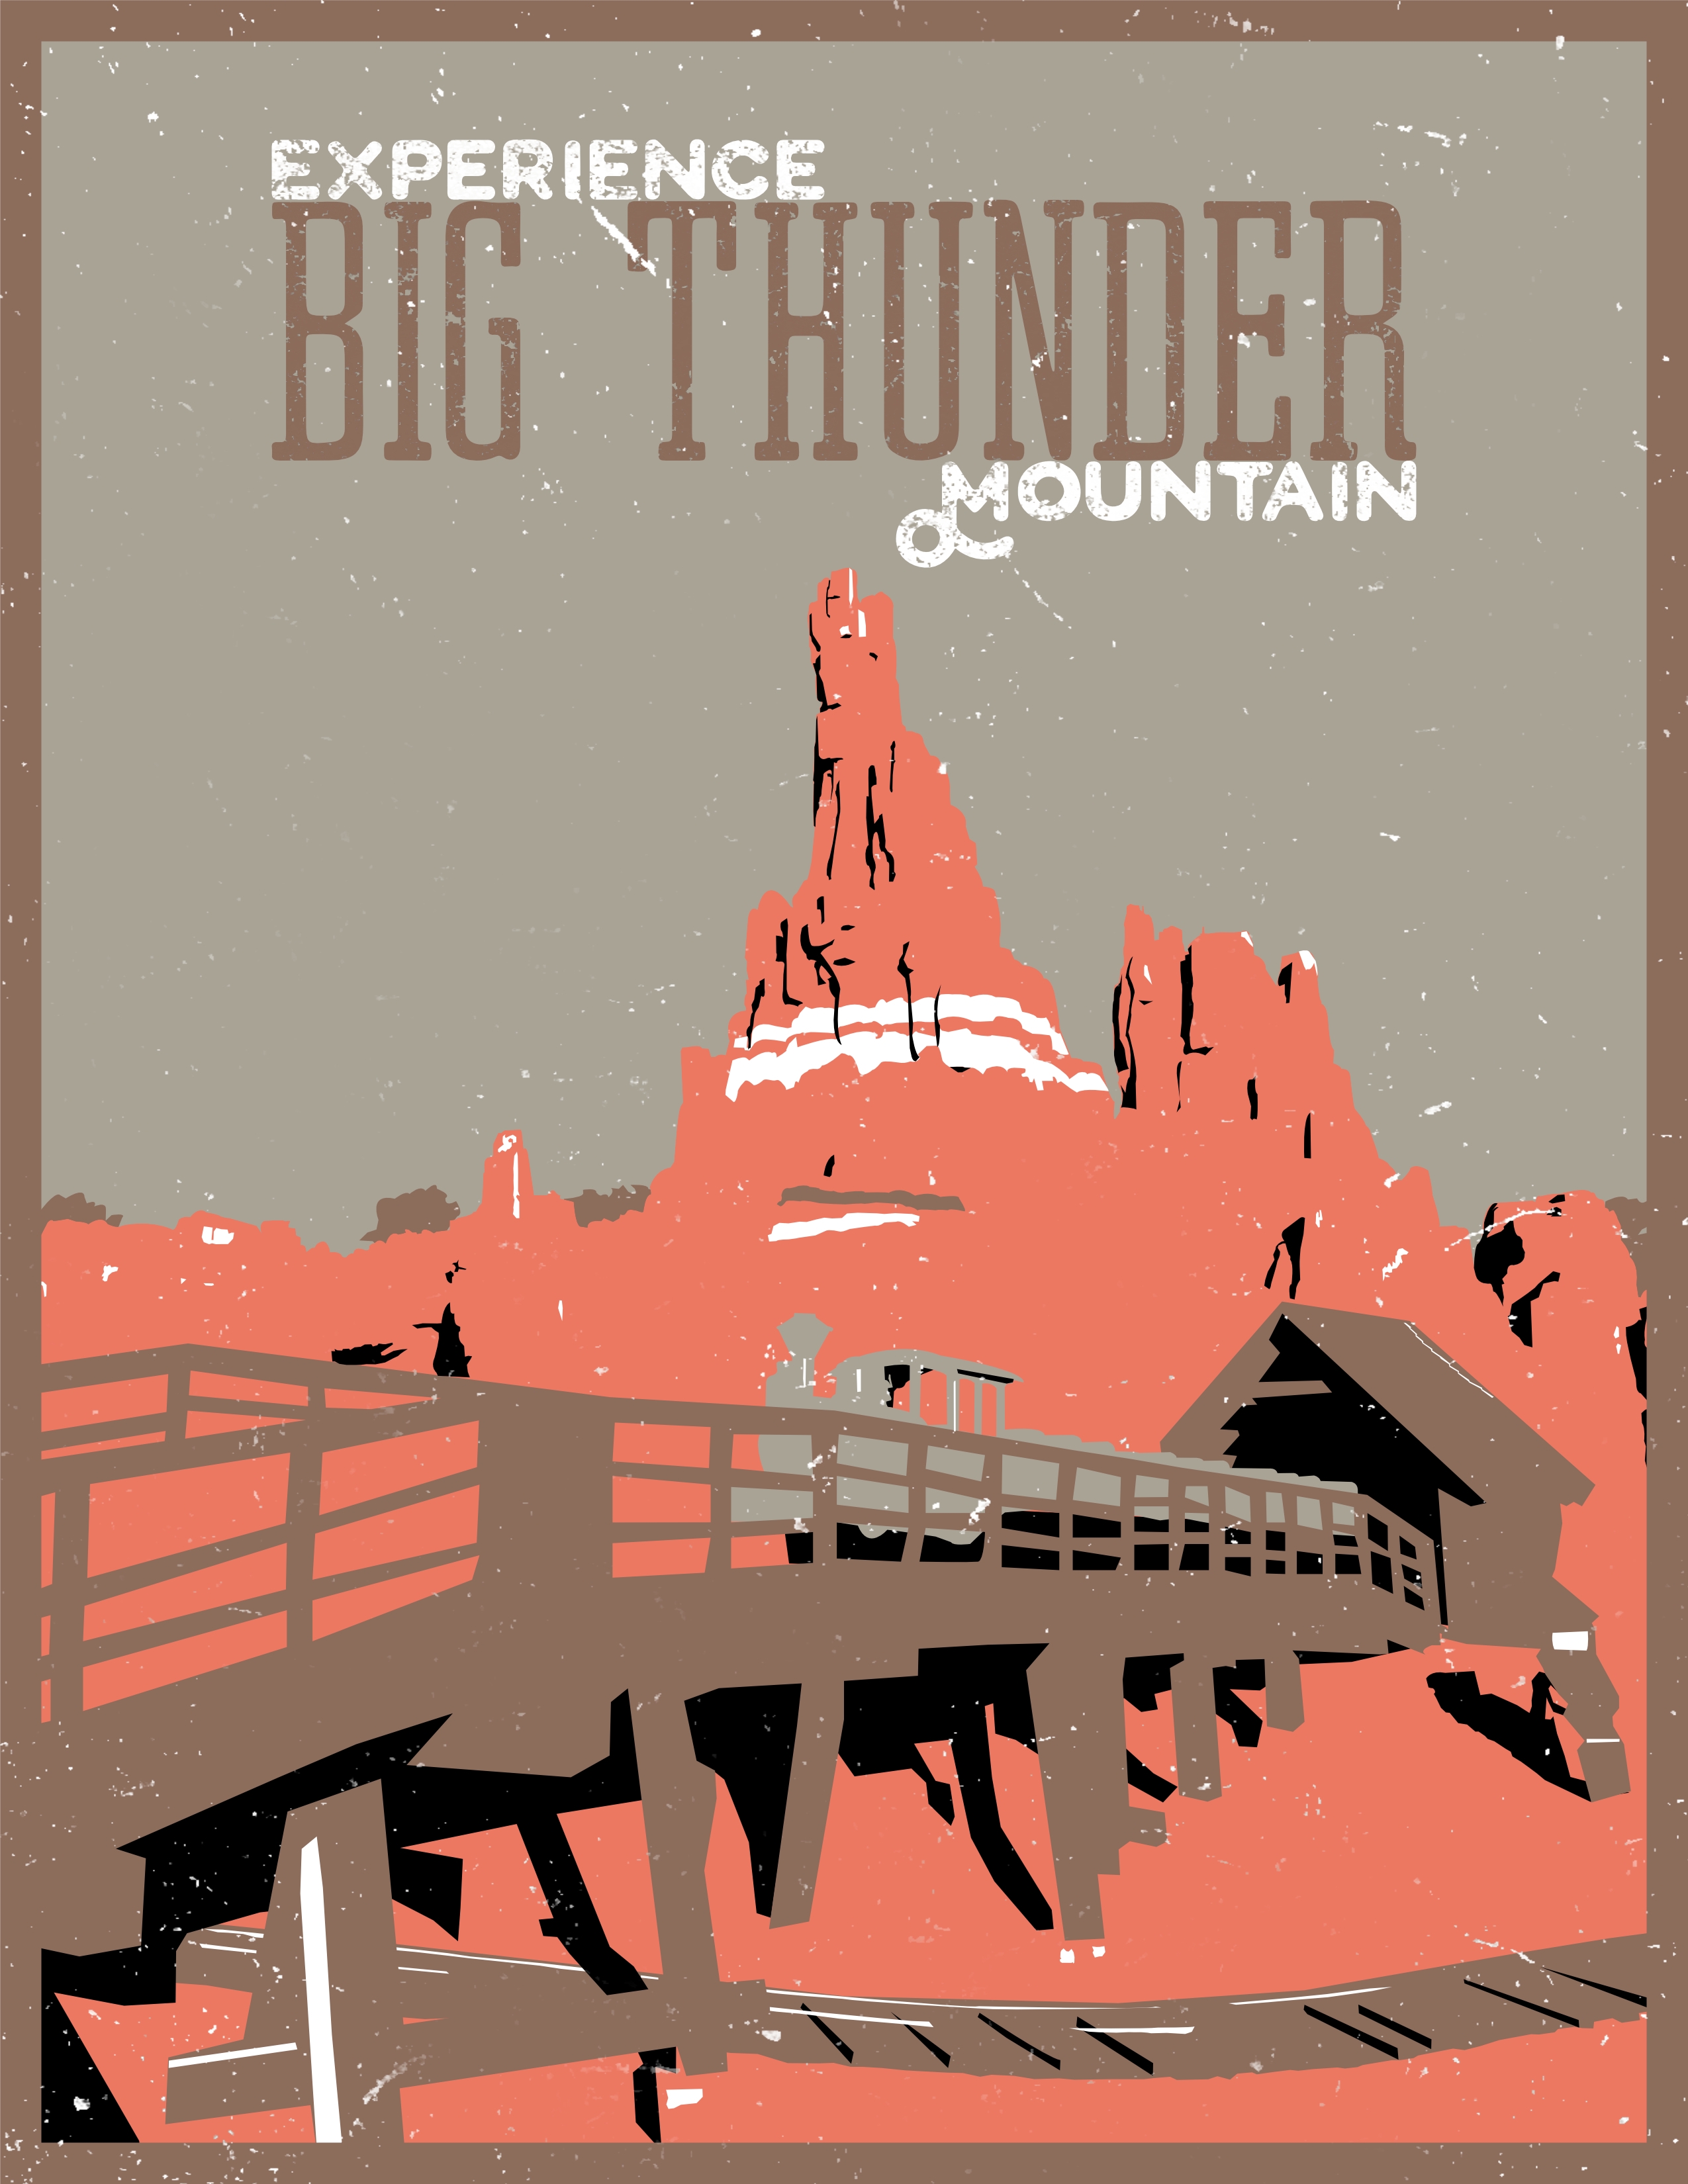 Retro style travel poster of Big Thunder Mountain in Disney World